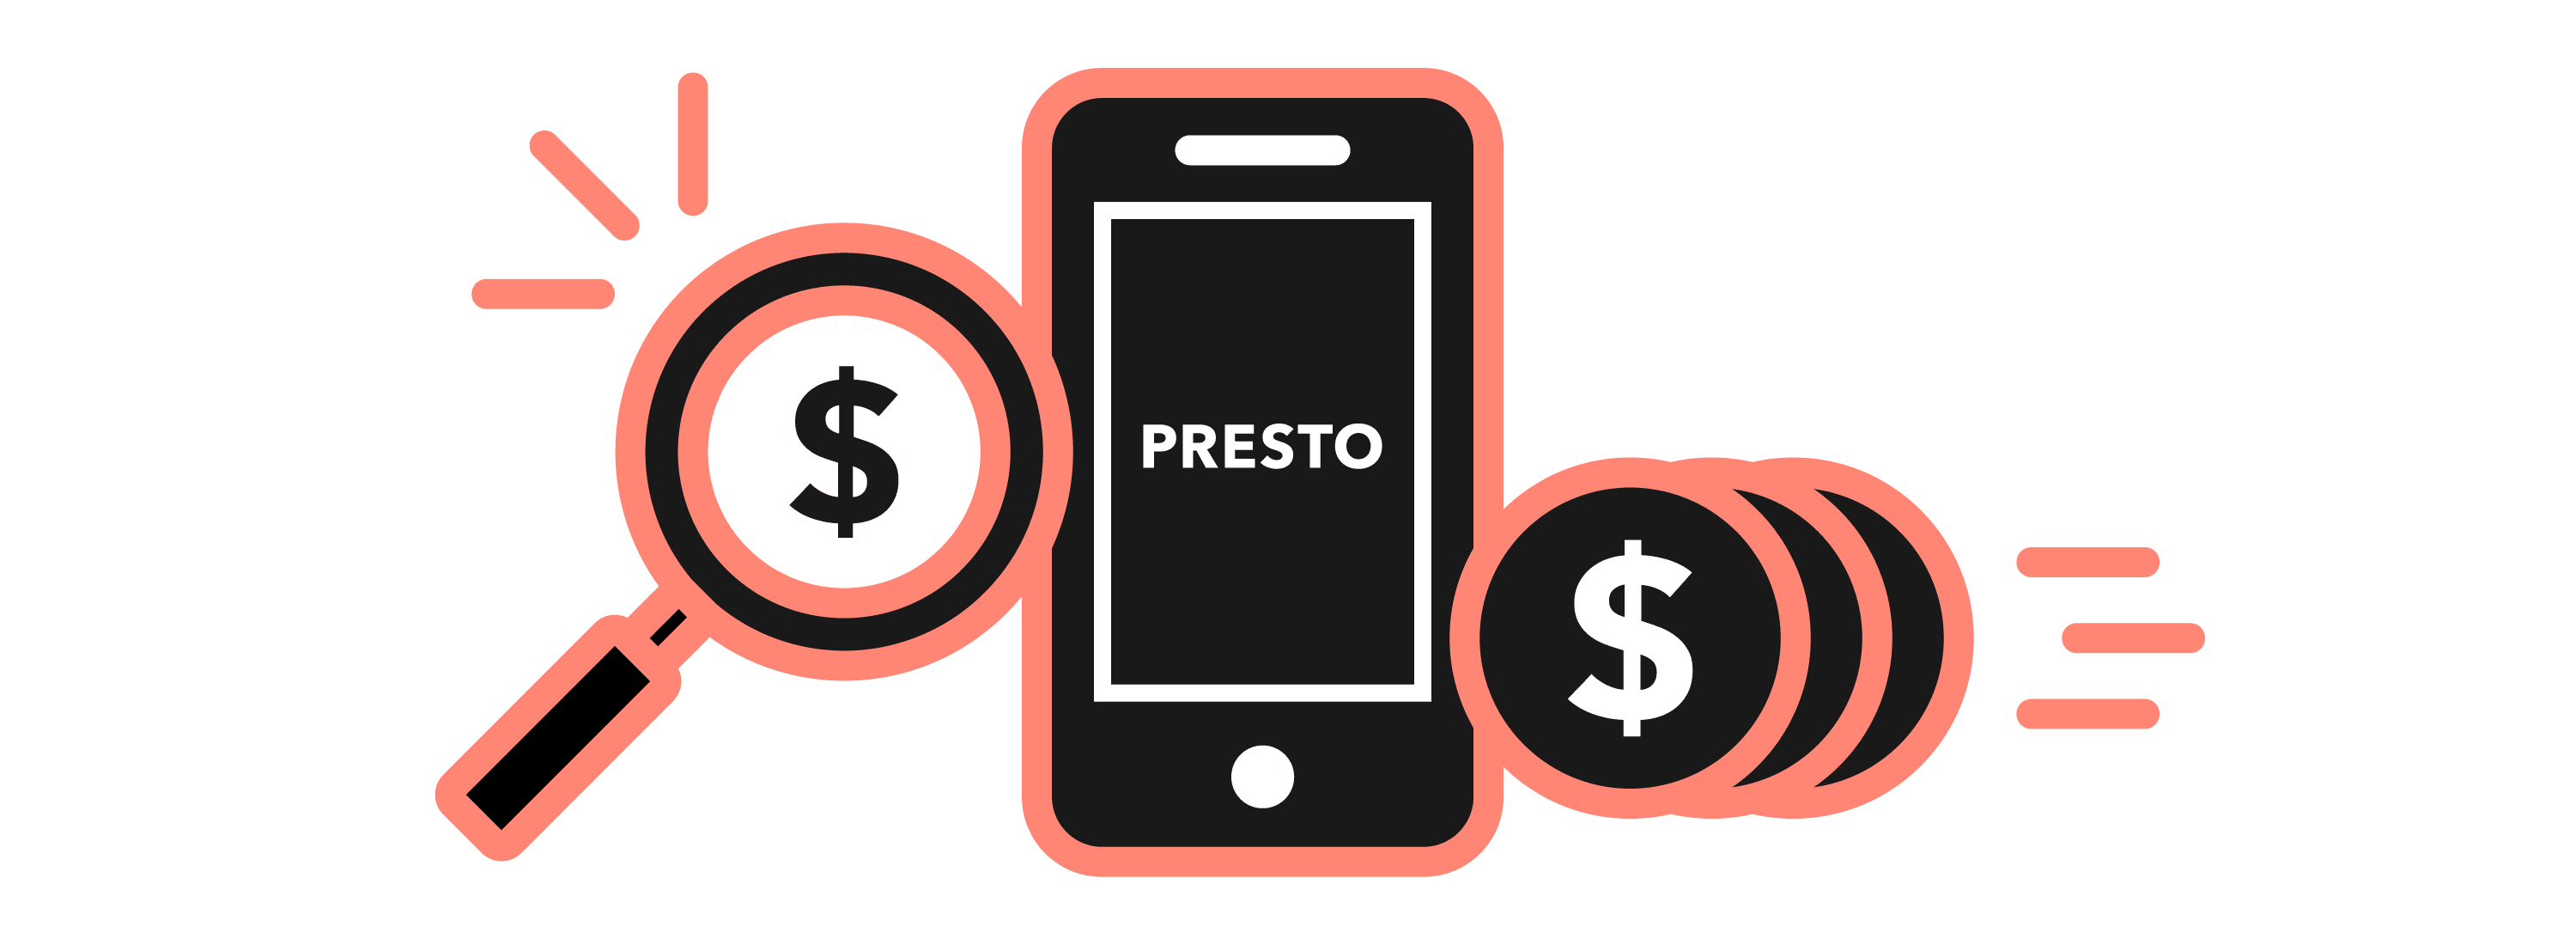 Graphic representing how to add money to a PRESTO card